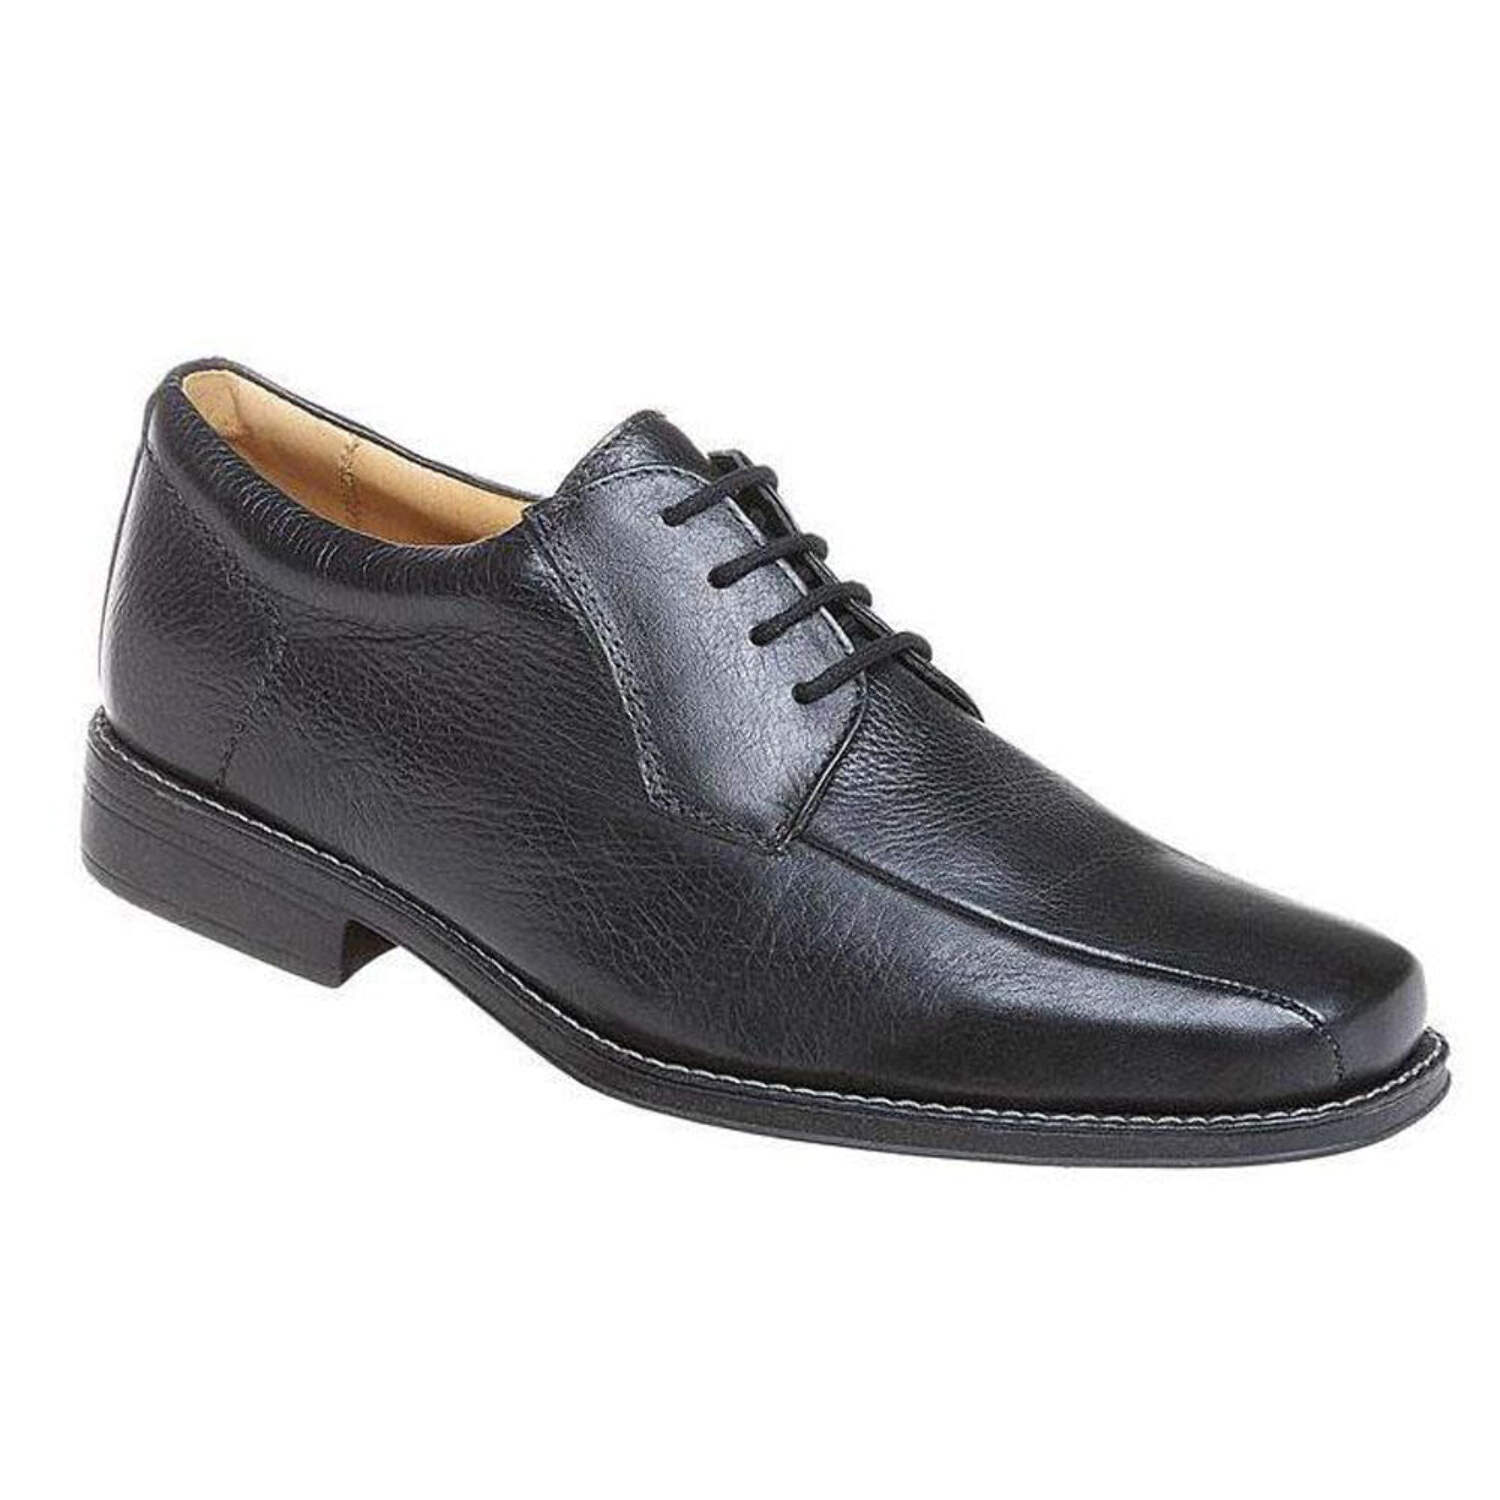 Derby Belmont Sandro Moscoloni Legitimate Leather Black Social Shoe - image 1 of 4